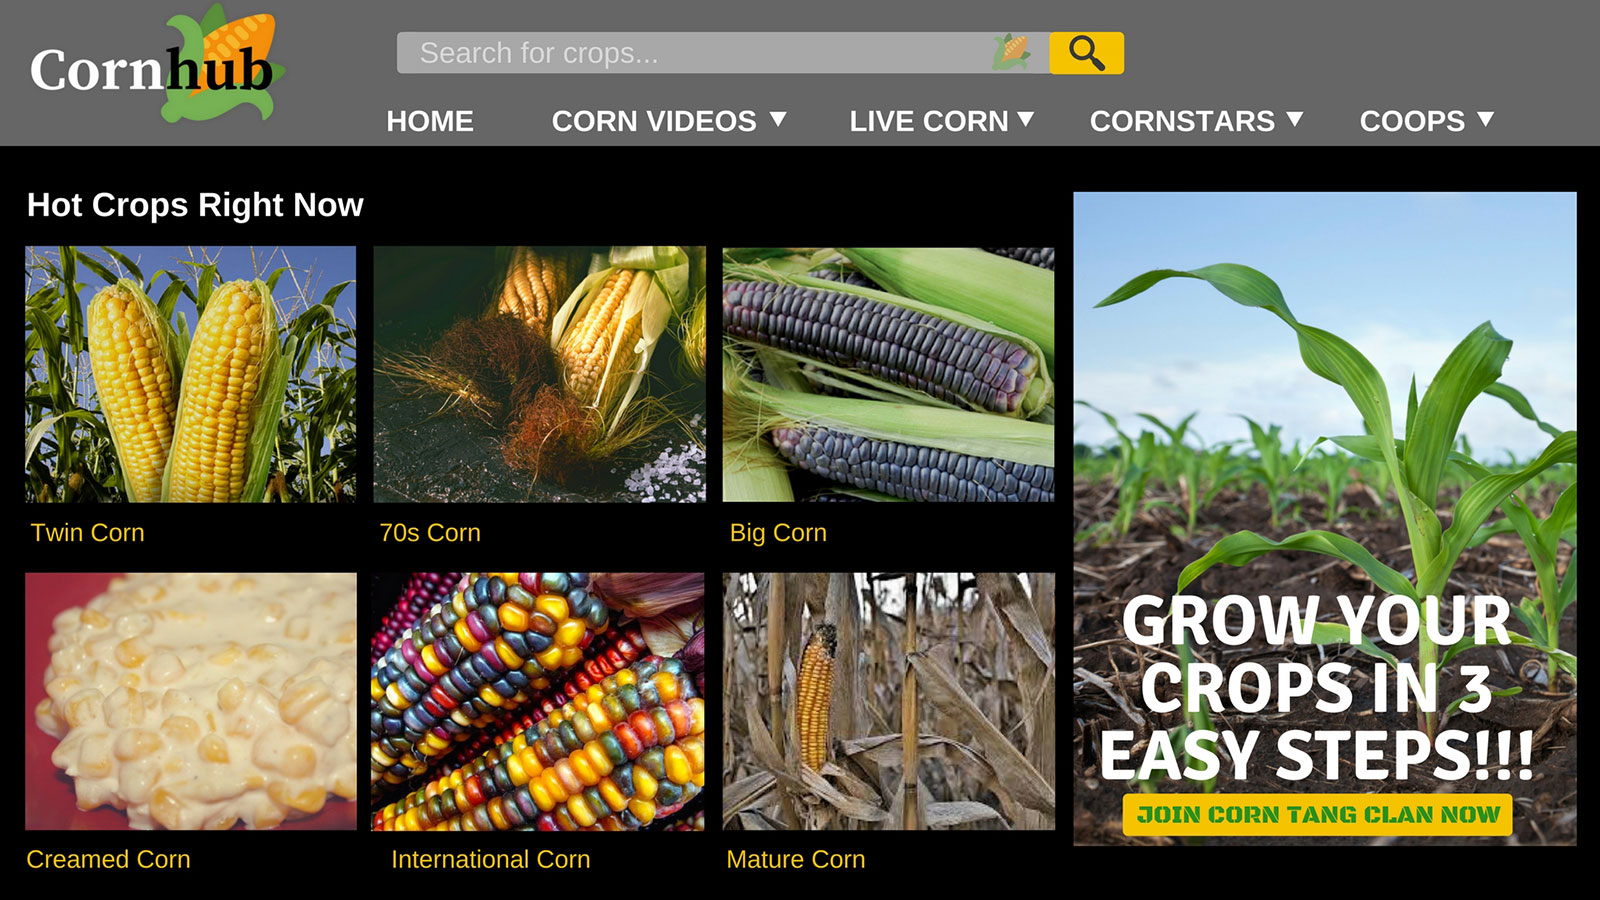 The Corn Hub